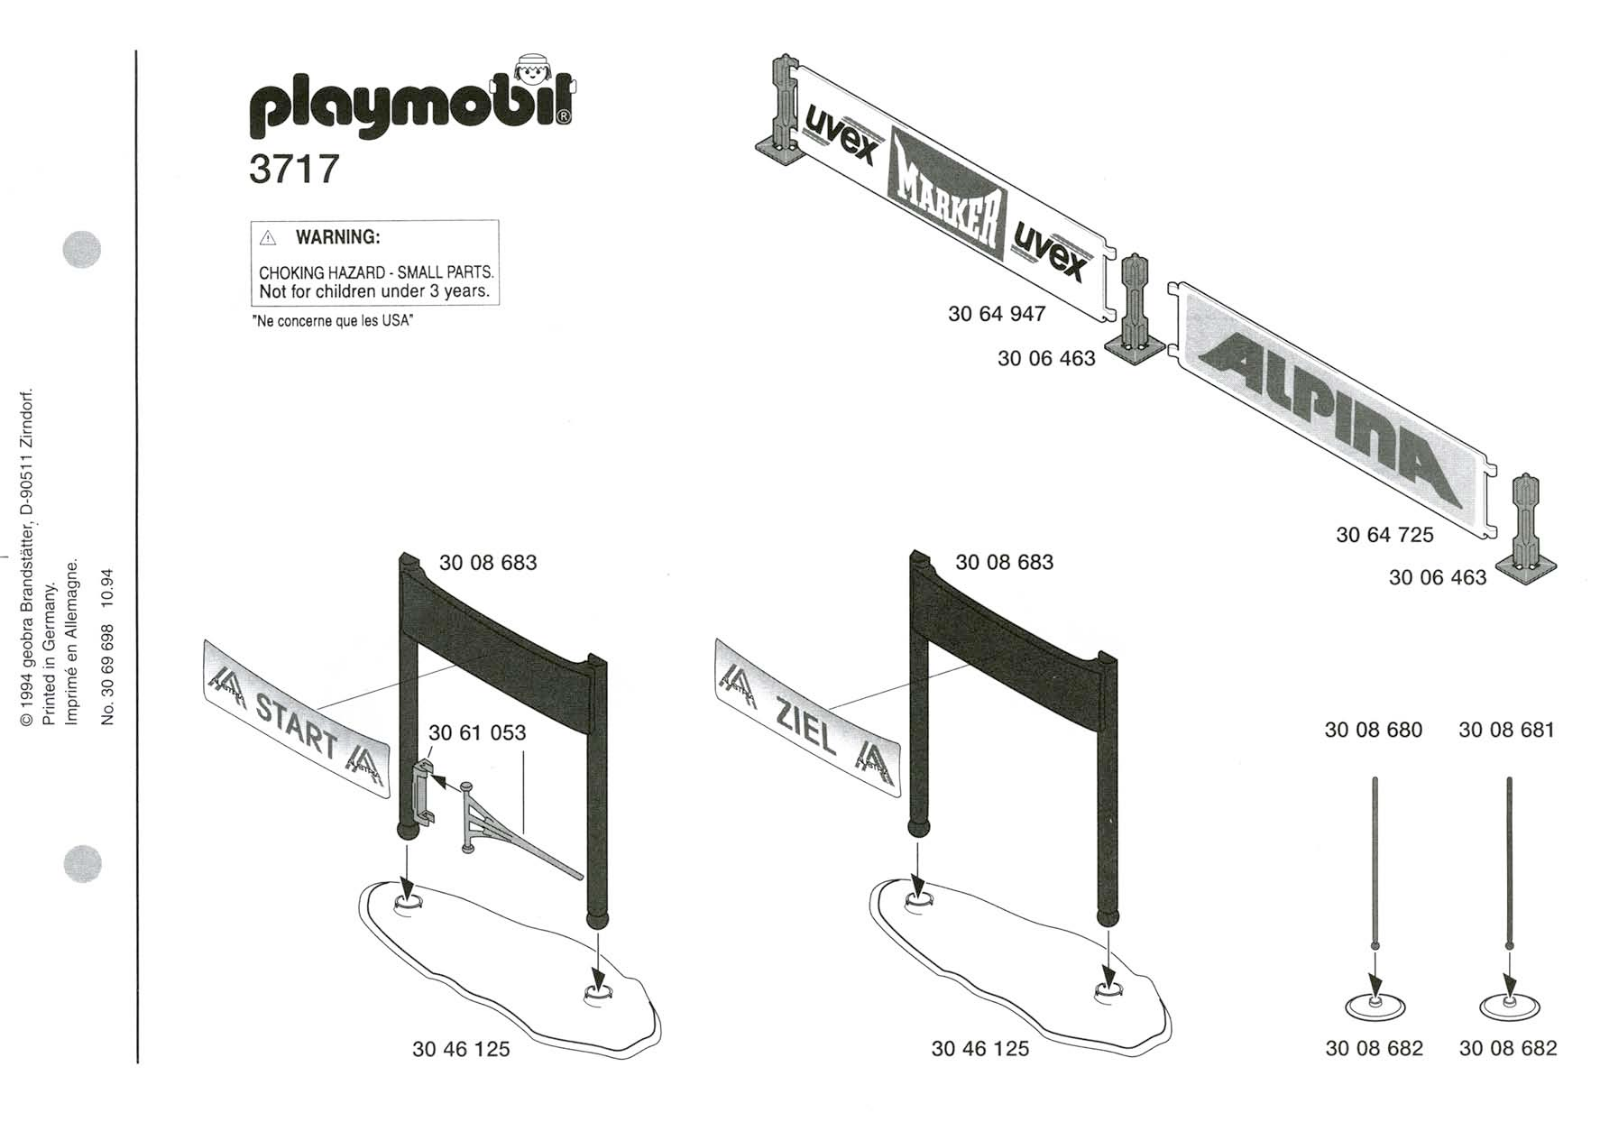 Playmobil 3717 Instructions